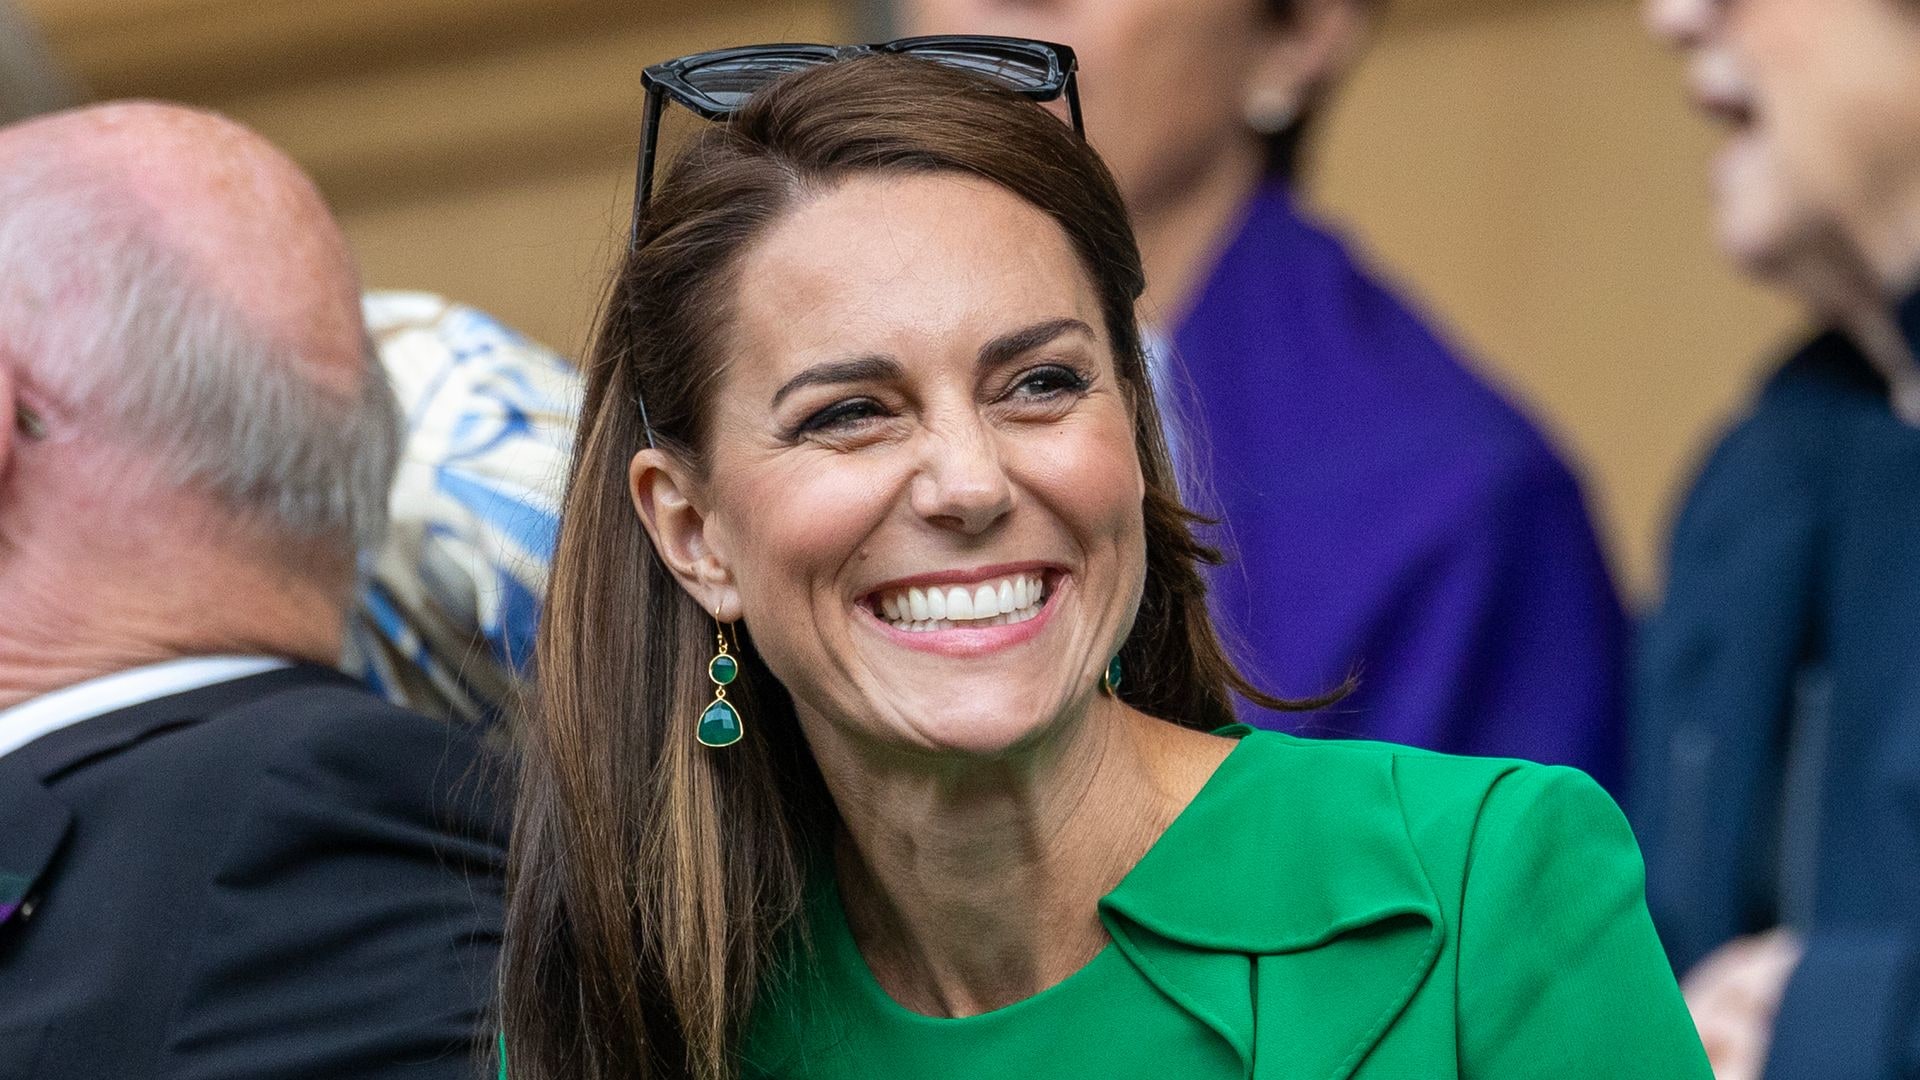 Kate Middleton smiling in the Royal Box